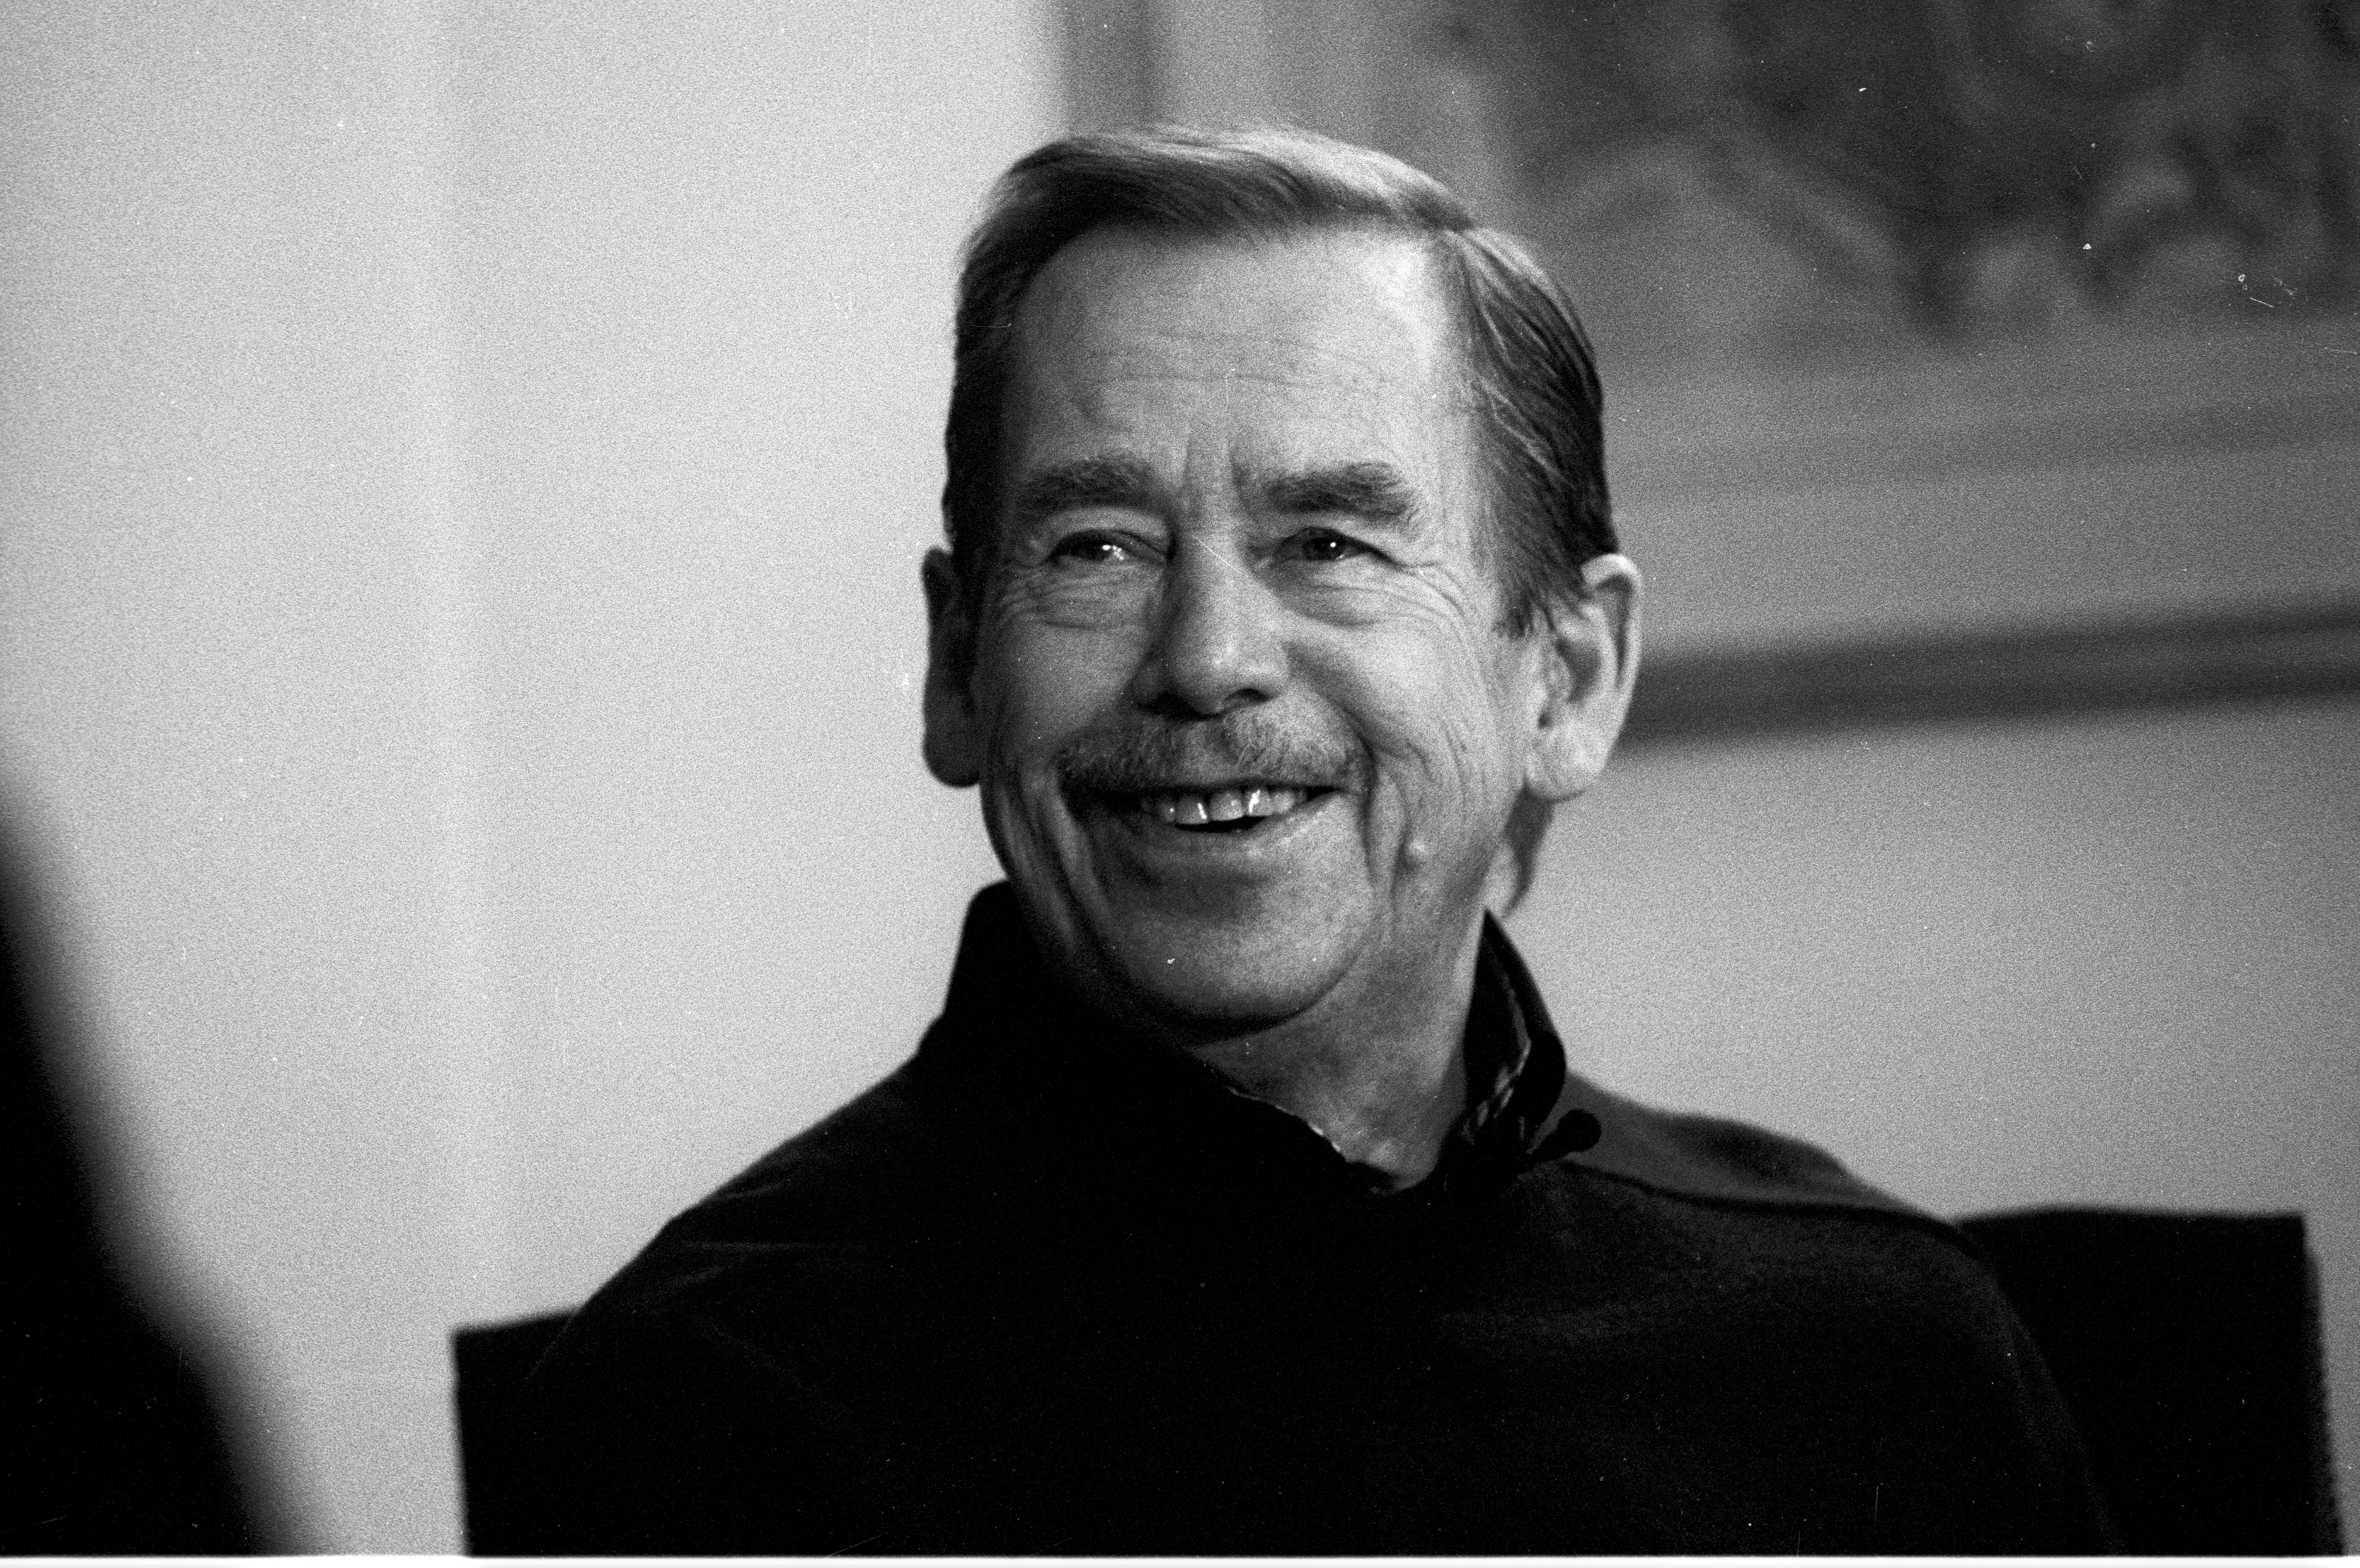 Václav Havel (Source: http://www.vize.cz/en/news.php?id=1084)